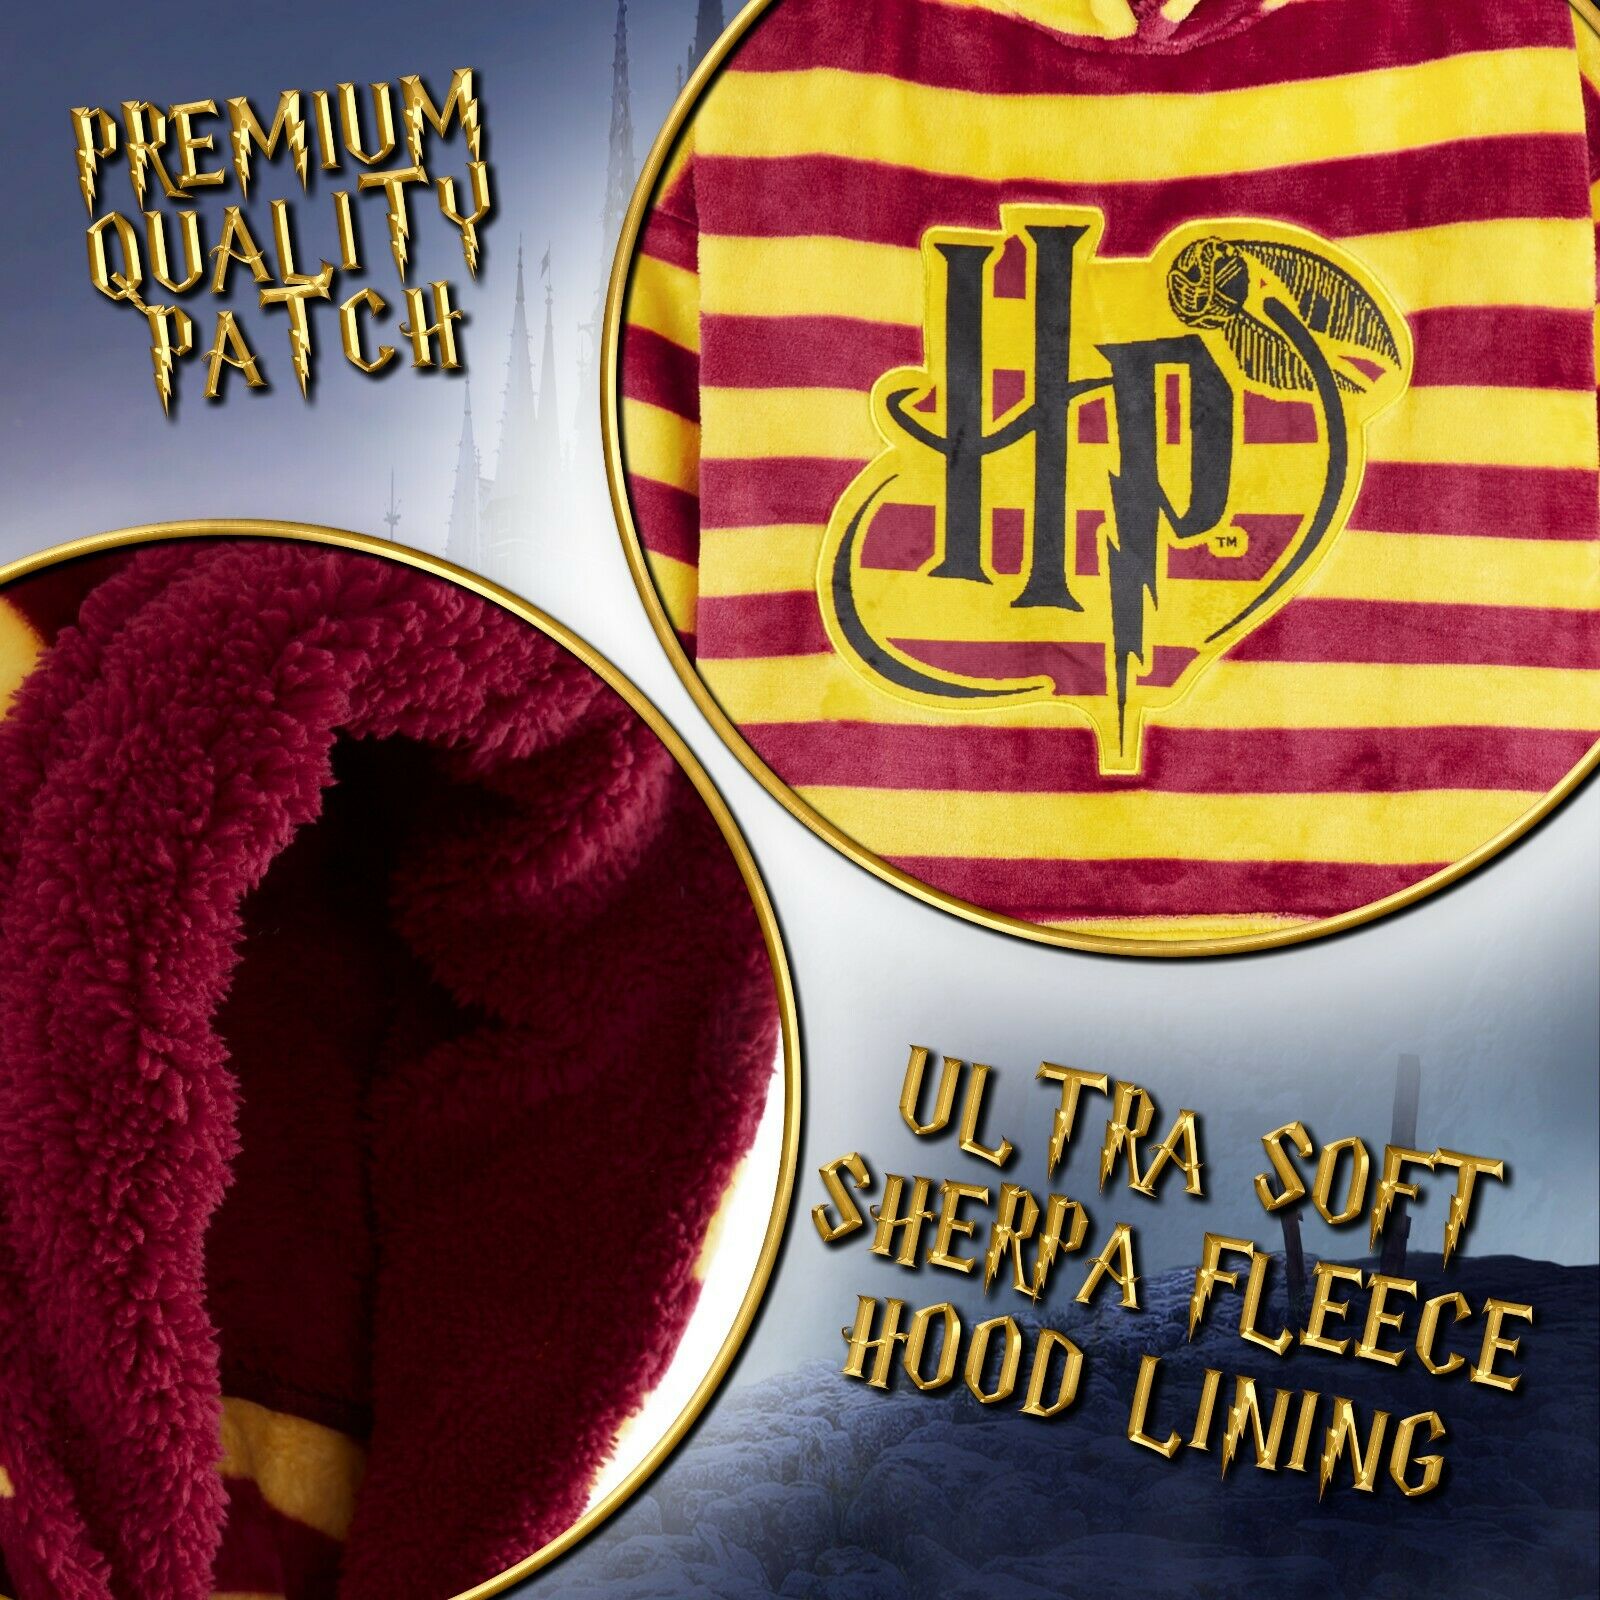 Harry Potter Red Hoodies For Girls, Kids Oversized Hoodie Blanket